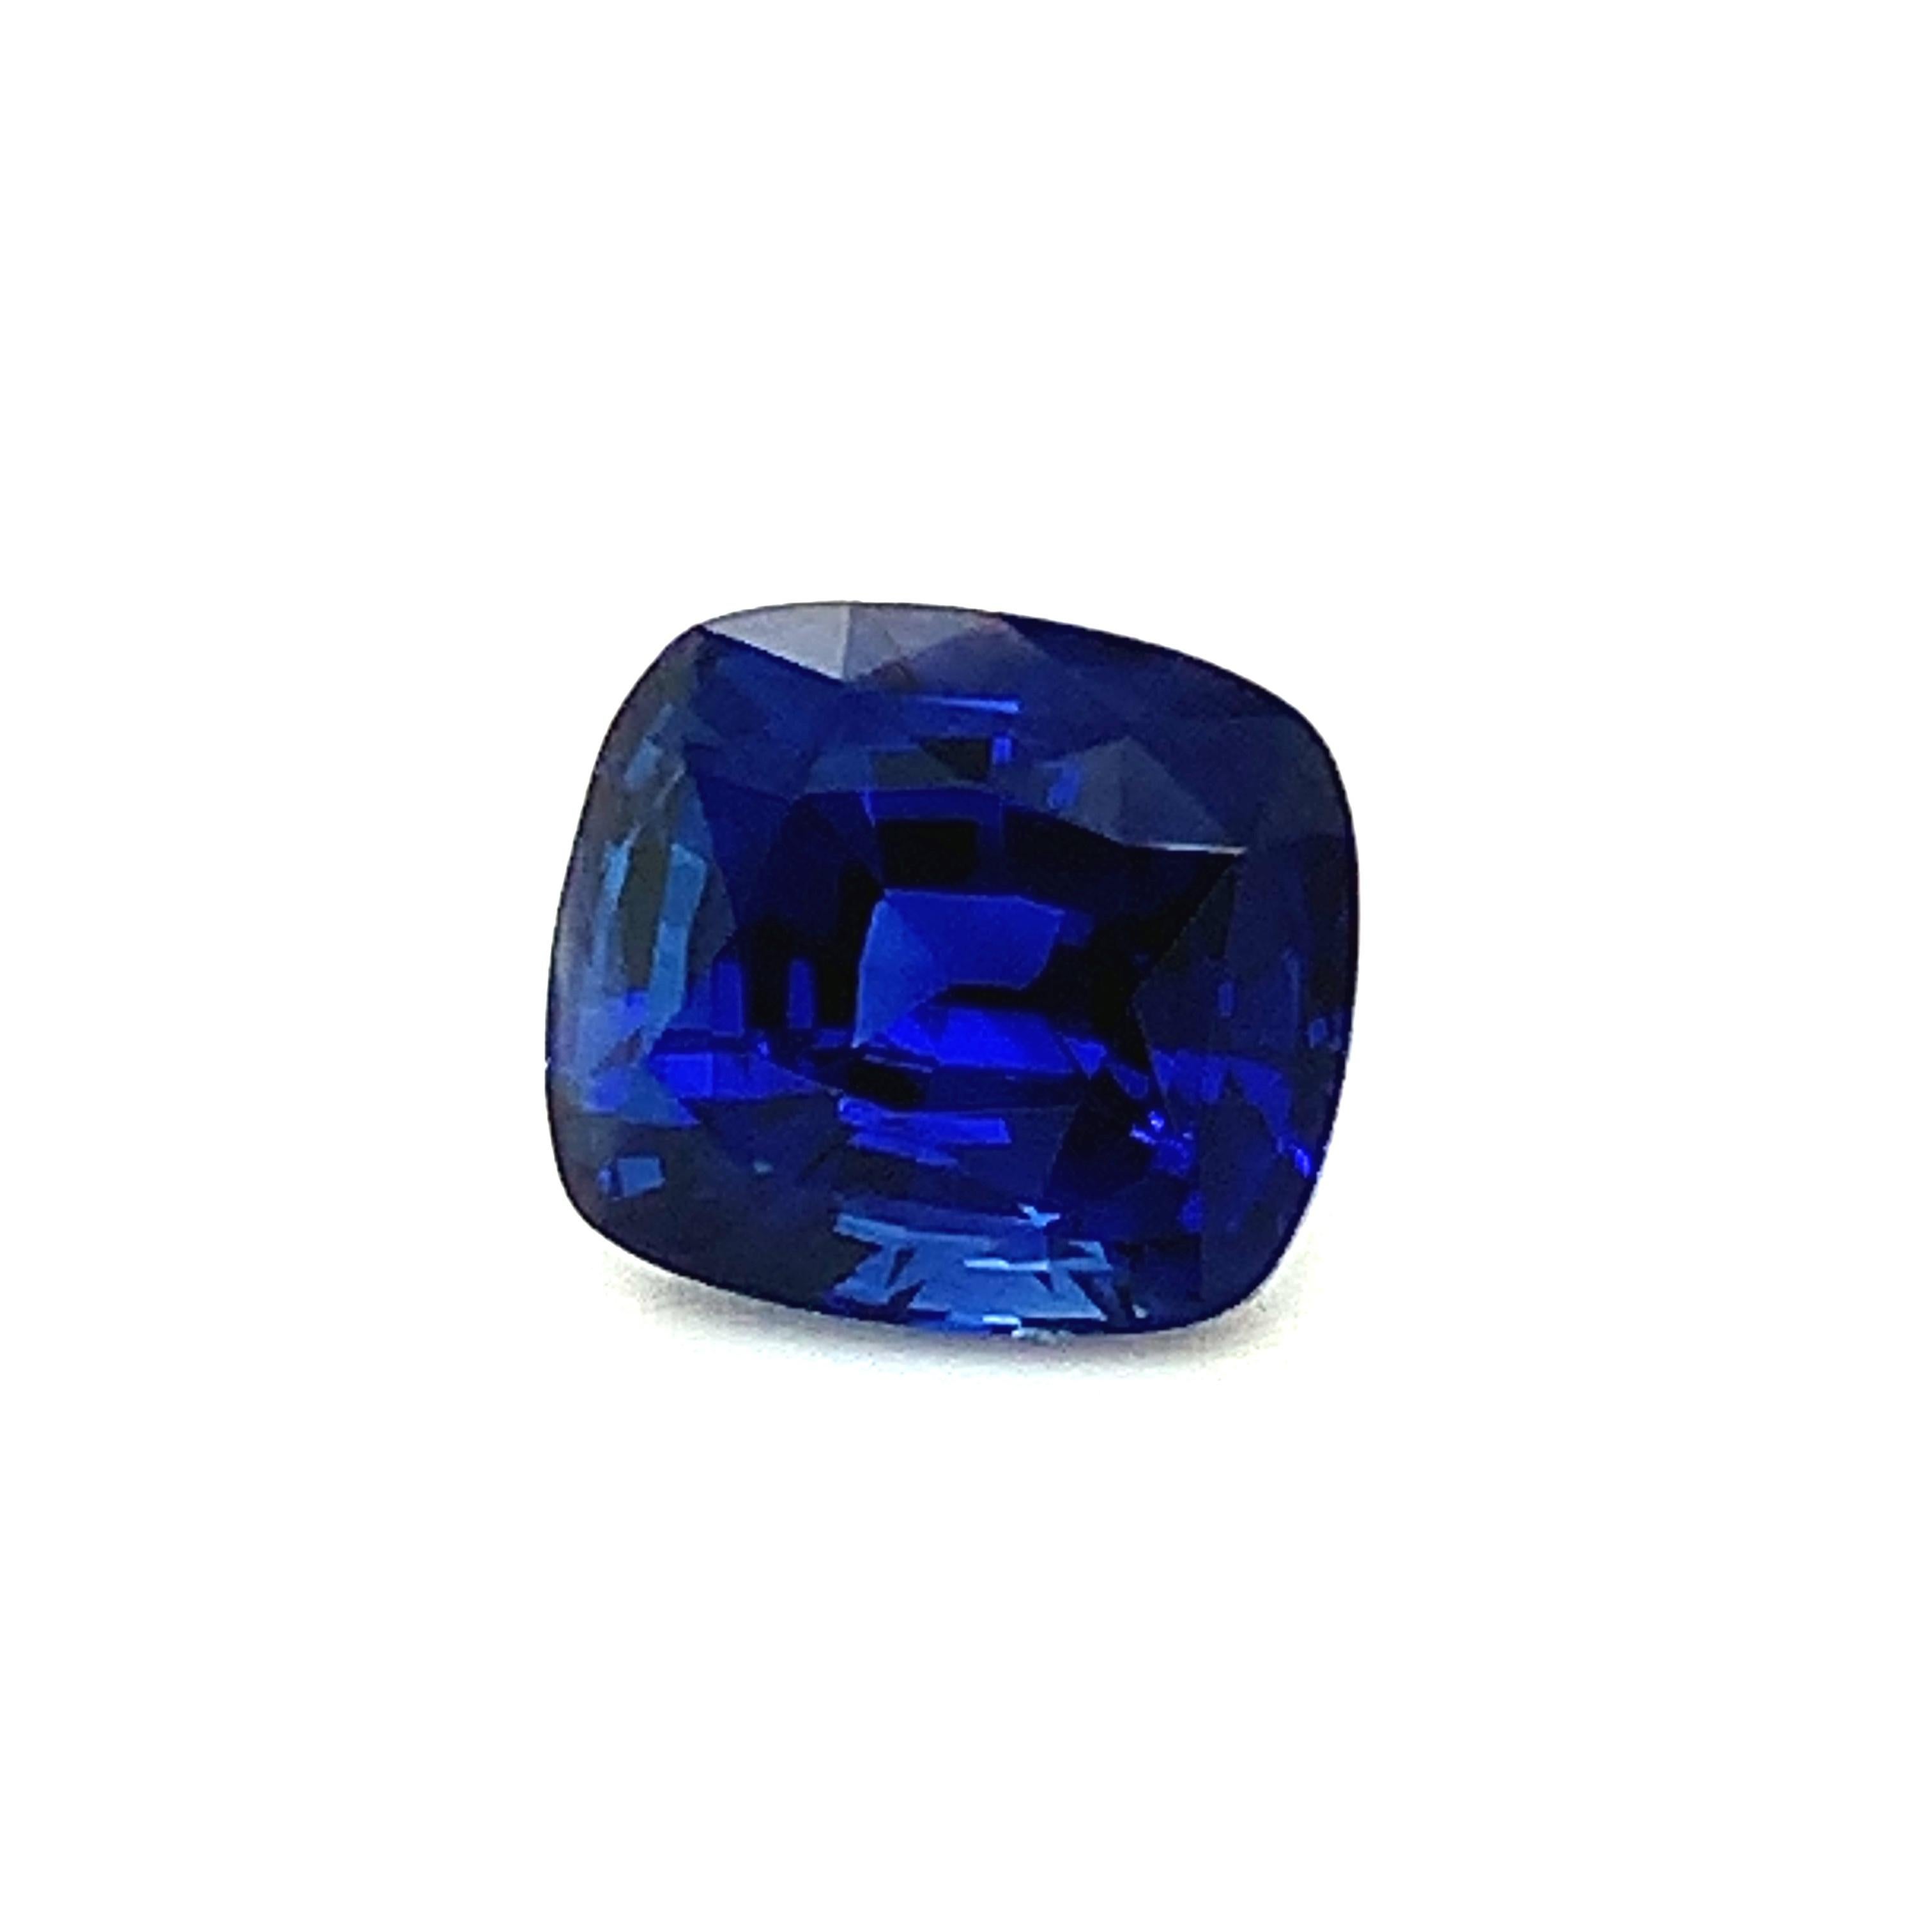 Cushion Cut 5.77 Carat Royal Blue Sapphire Cushion, Unset Loose Gemstone, GIA Certified